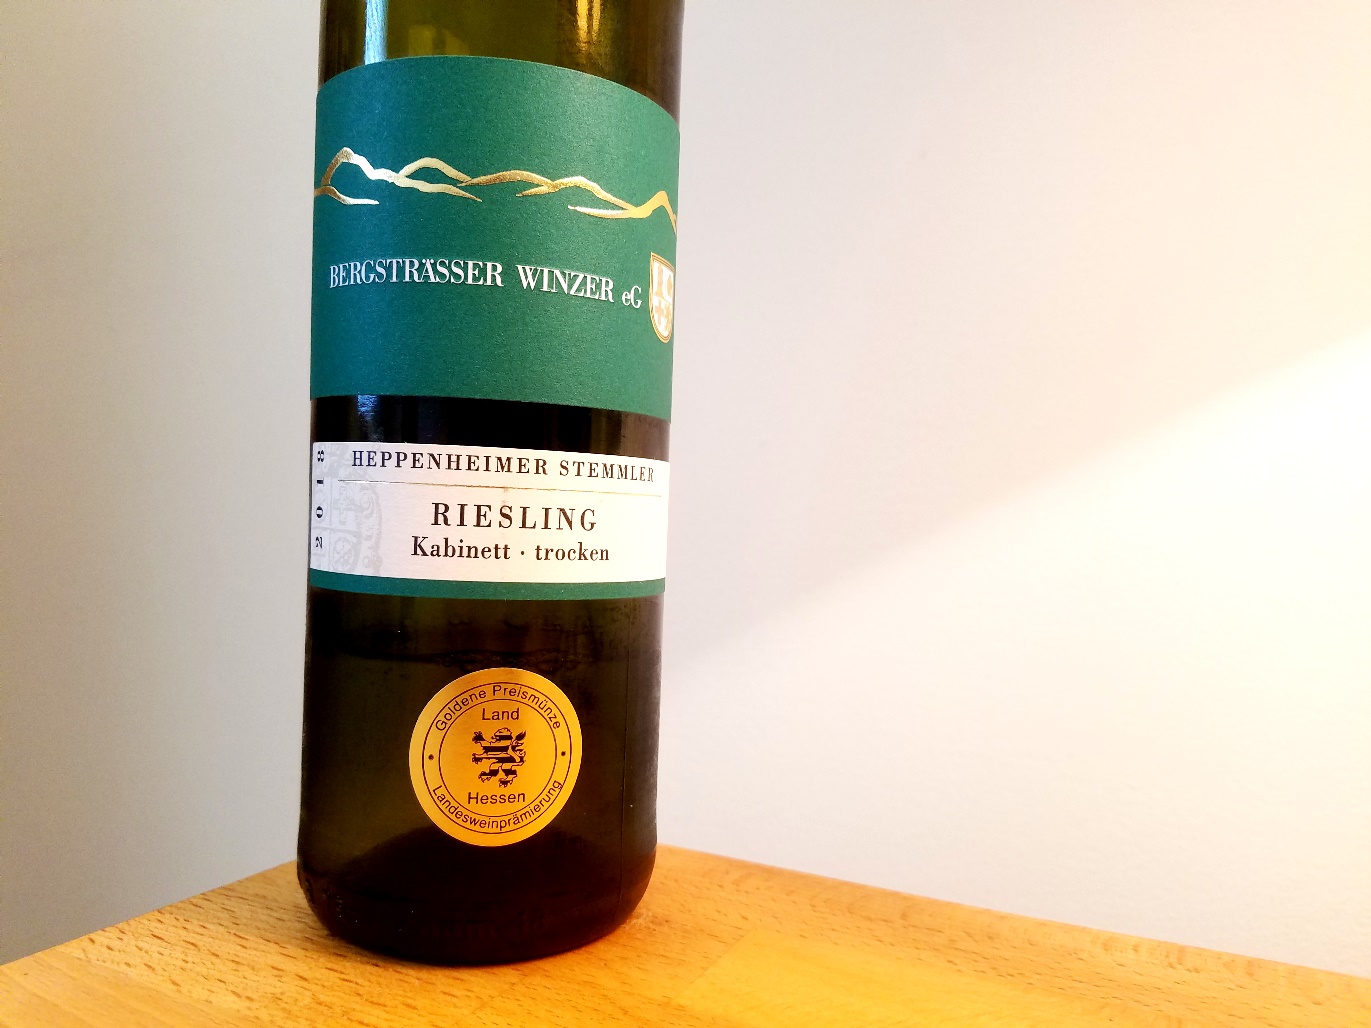 Bergsträsser Winzer, Heppenheimer Stemmler Riesling Kabinett Trocken 2018, Heissische Bergstrasse, Germany, Wine Casual